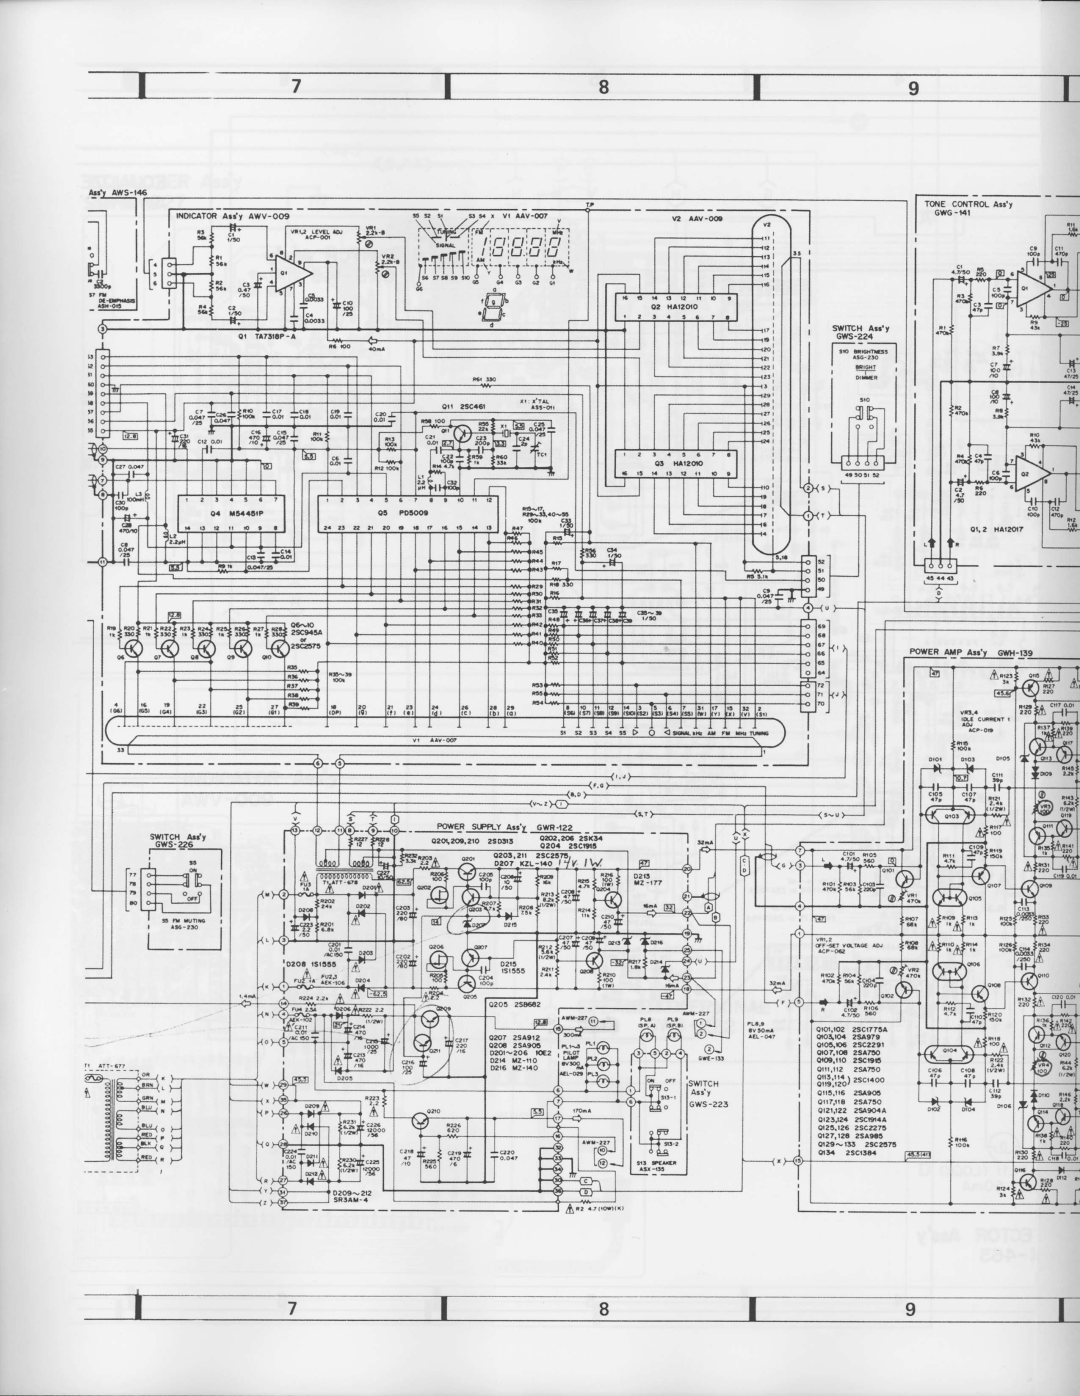 Pioneer SX-3800 manual i ITJJi, Nffi, j-*-1 FFI, L$r-ffir, Fmraroe, l.ey awv-oog, ? I ,e, I -,,.r 